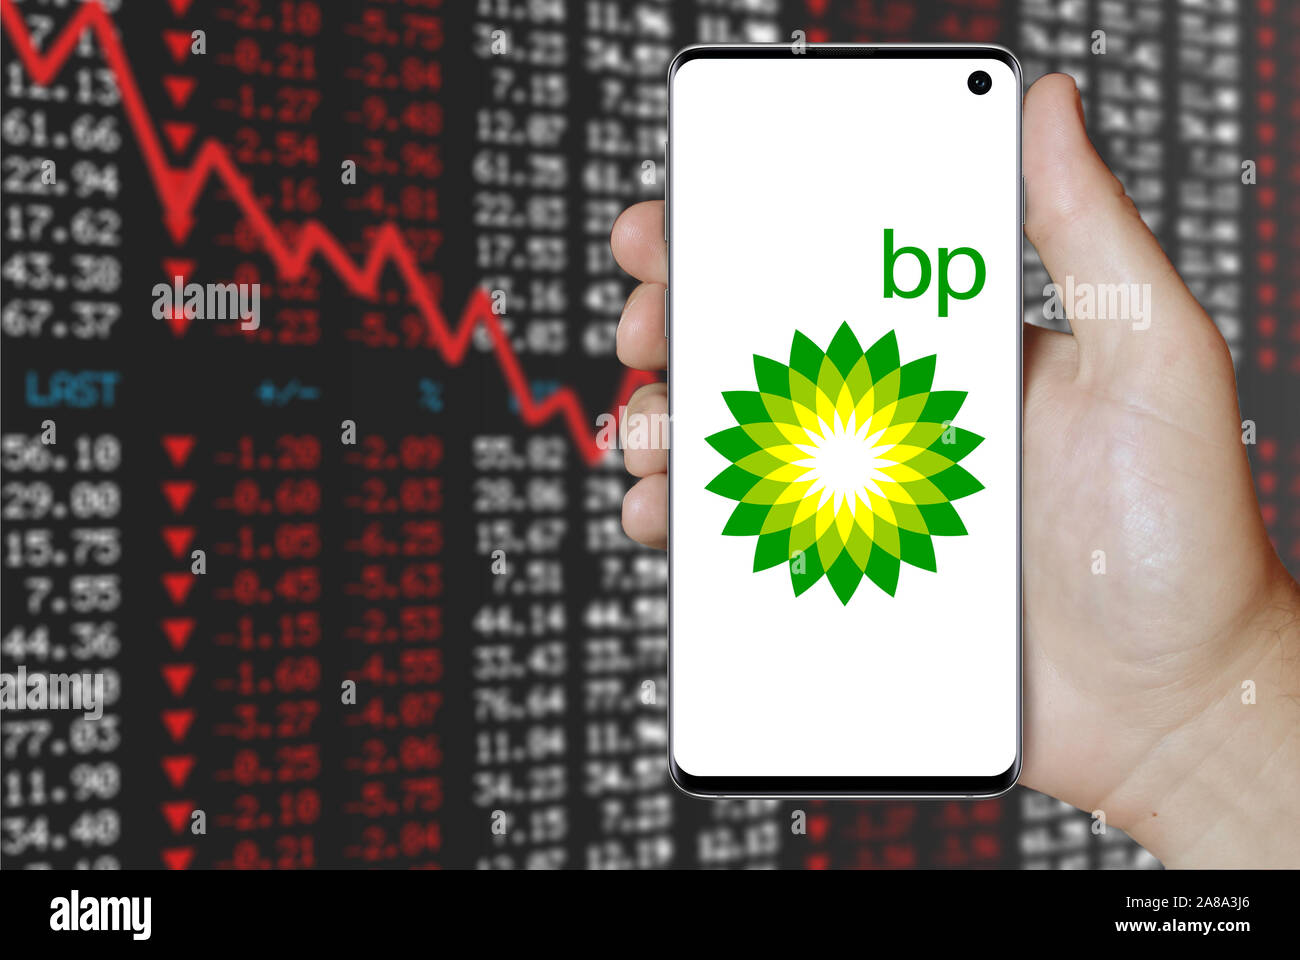 Logo of public company BP displayed on a smartphone. Negative stock market background. Credit: PIXDUCE Stock Photo